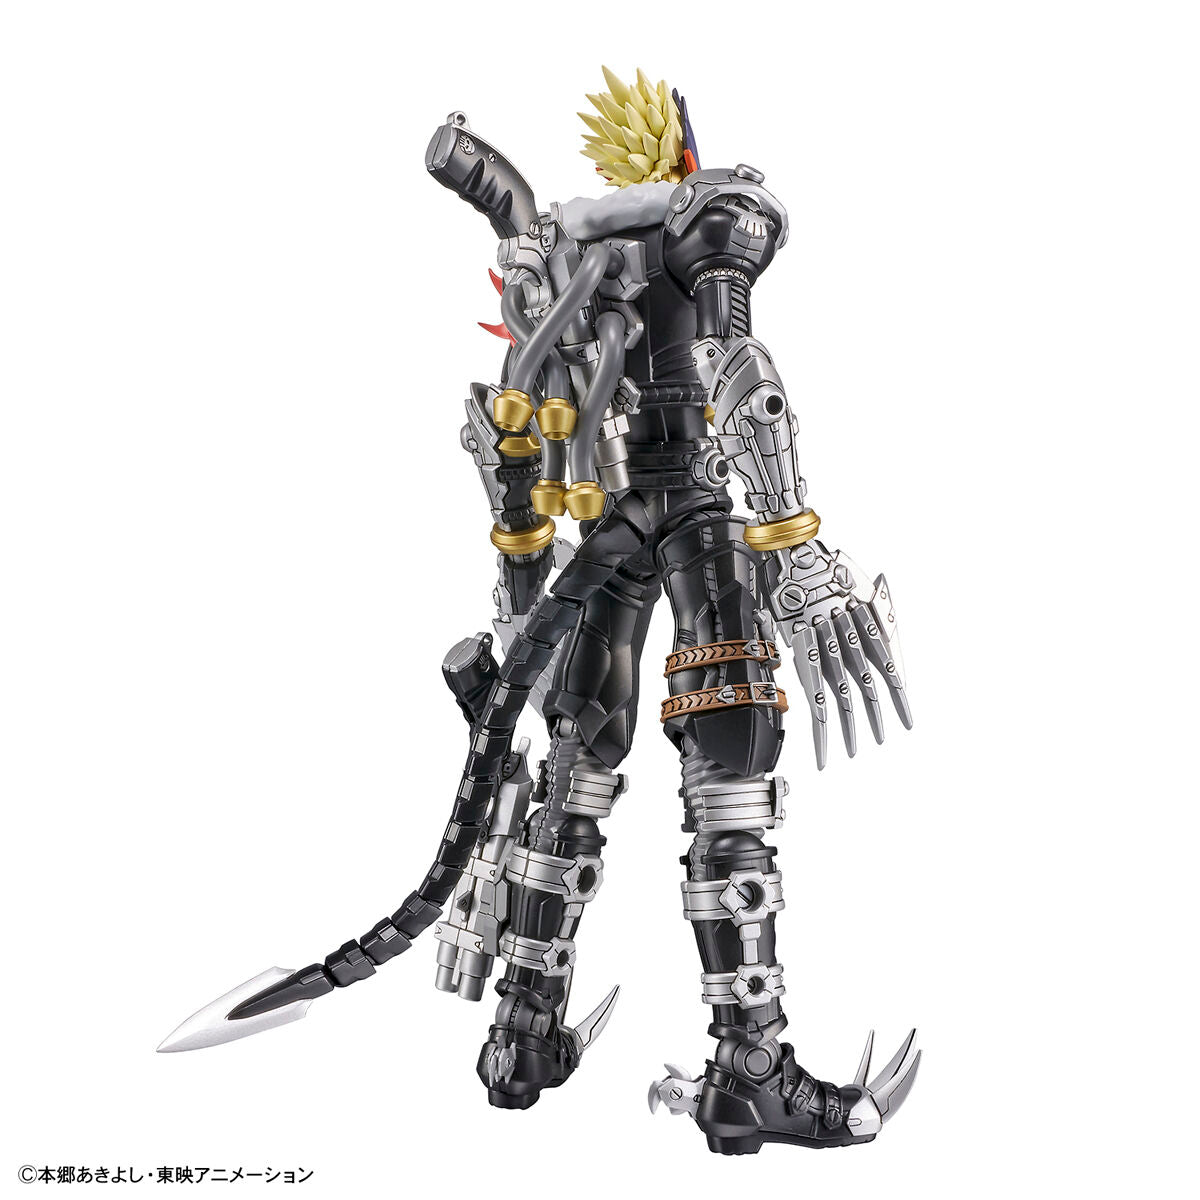 Digimon - Figure-rise Standard - Amplified Beelzemon